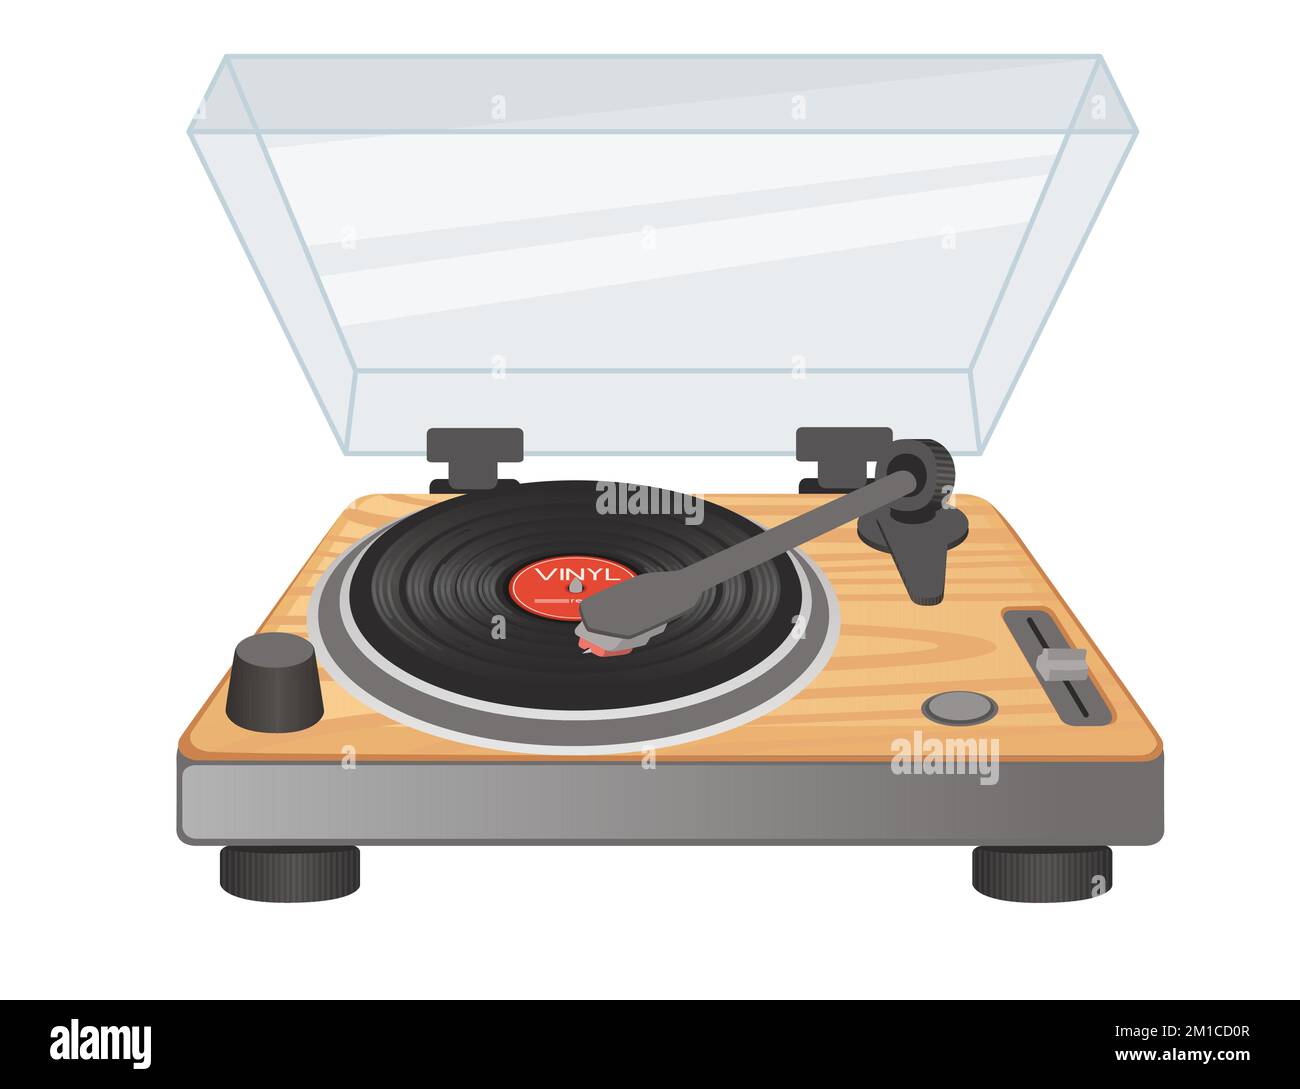 View Larger Imagesharedesign Mini Retro Turntable Phonograph Car